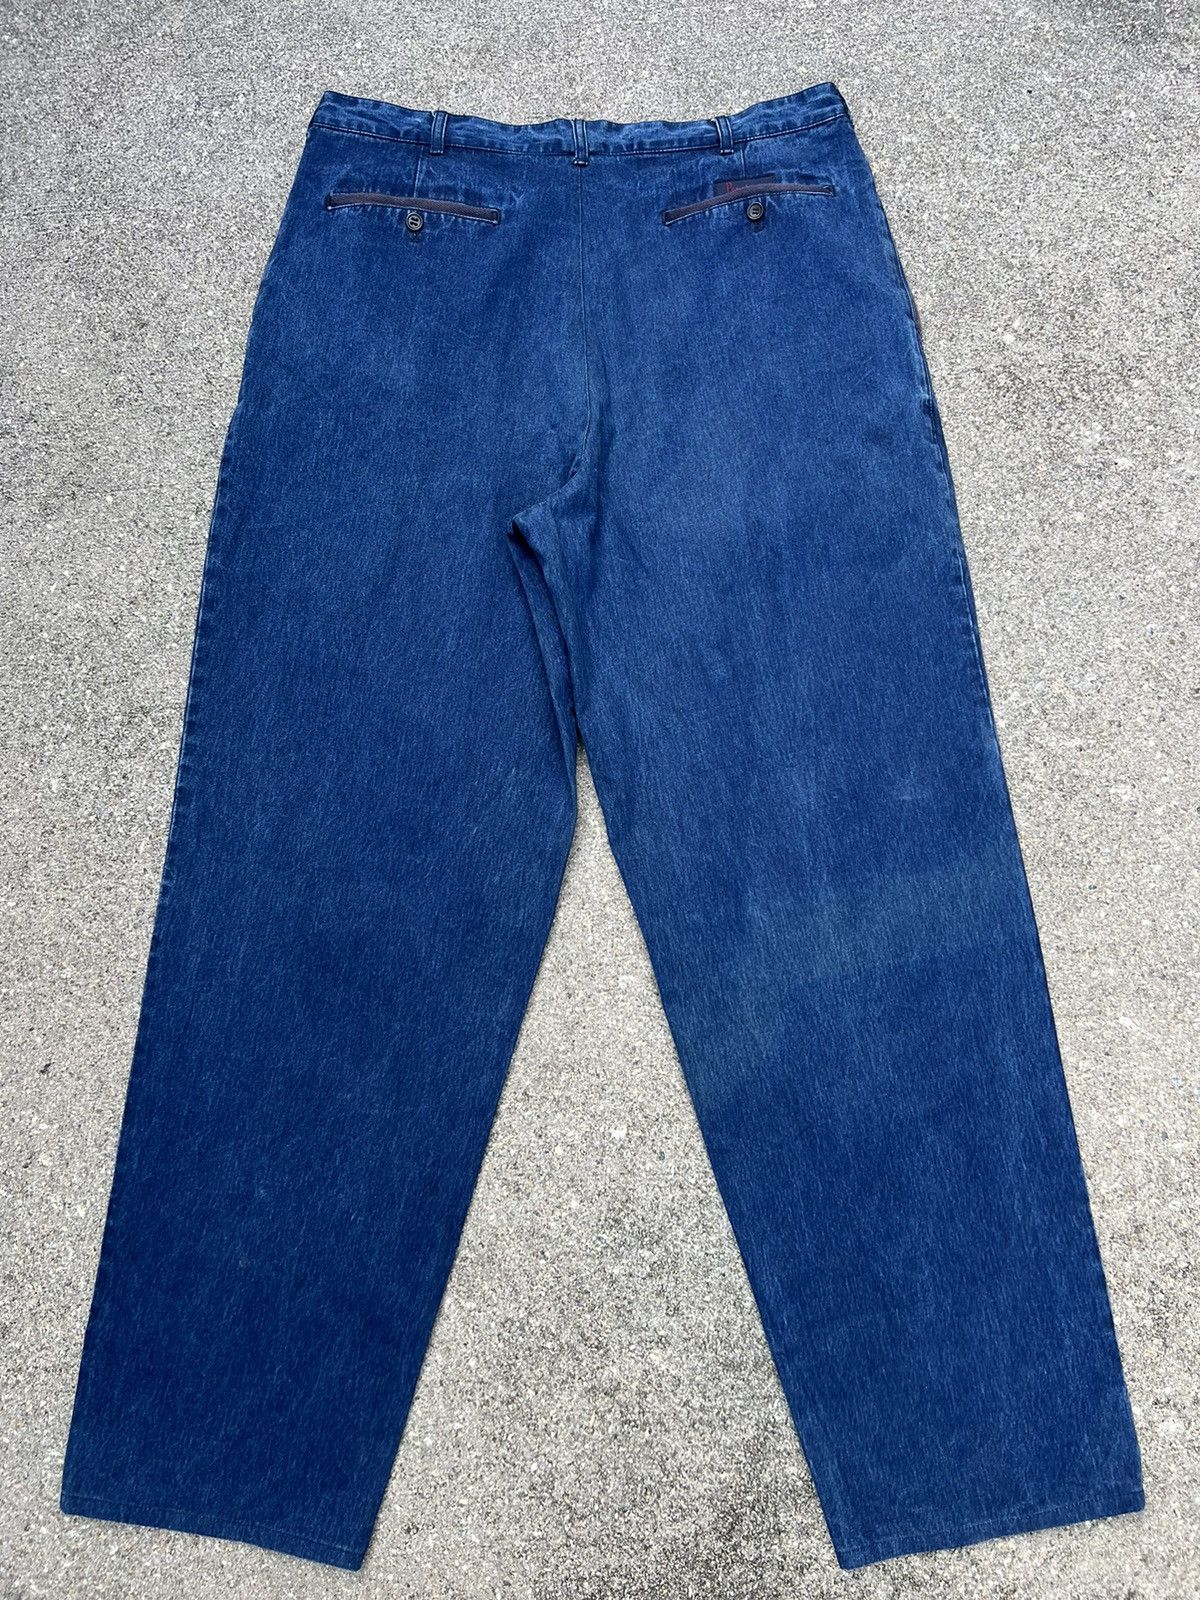 Orslow Vintage Papas Japan Sun Faded Indigo Blue Baggy Chinos Pant Size US 34 / EU 50 - 5 Thumbnail